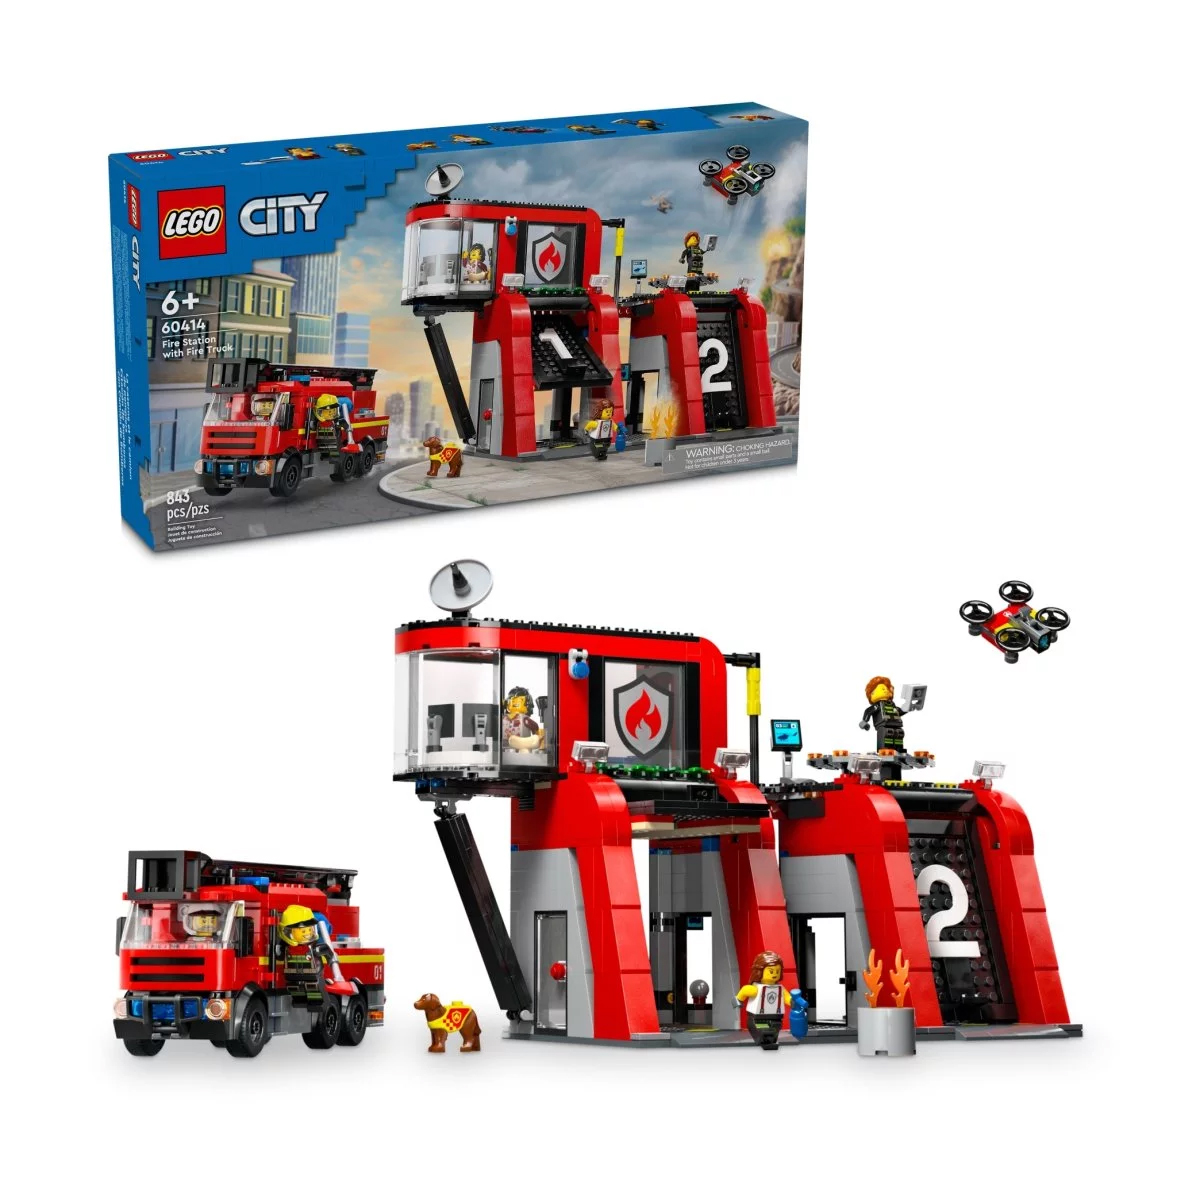 Конструктор Lego City Fire Station with Fire Truck 60414, 843 детали